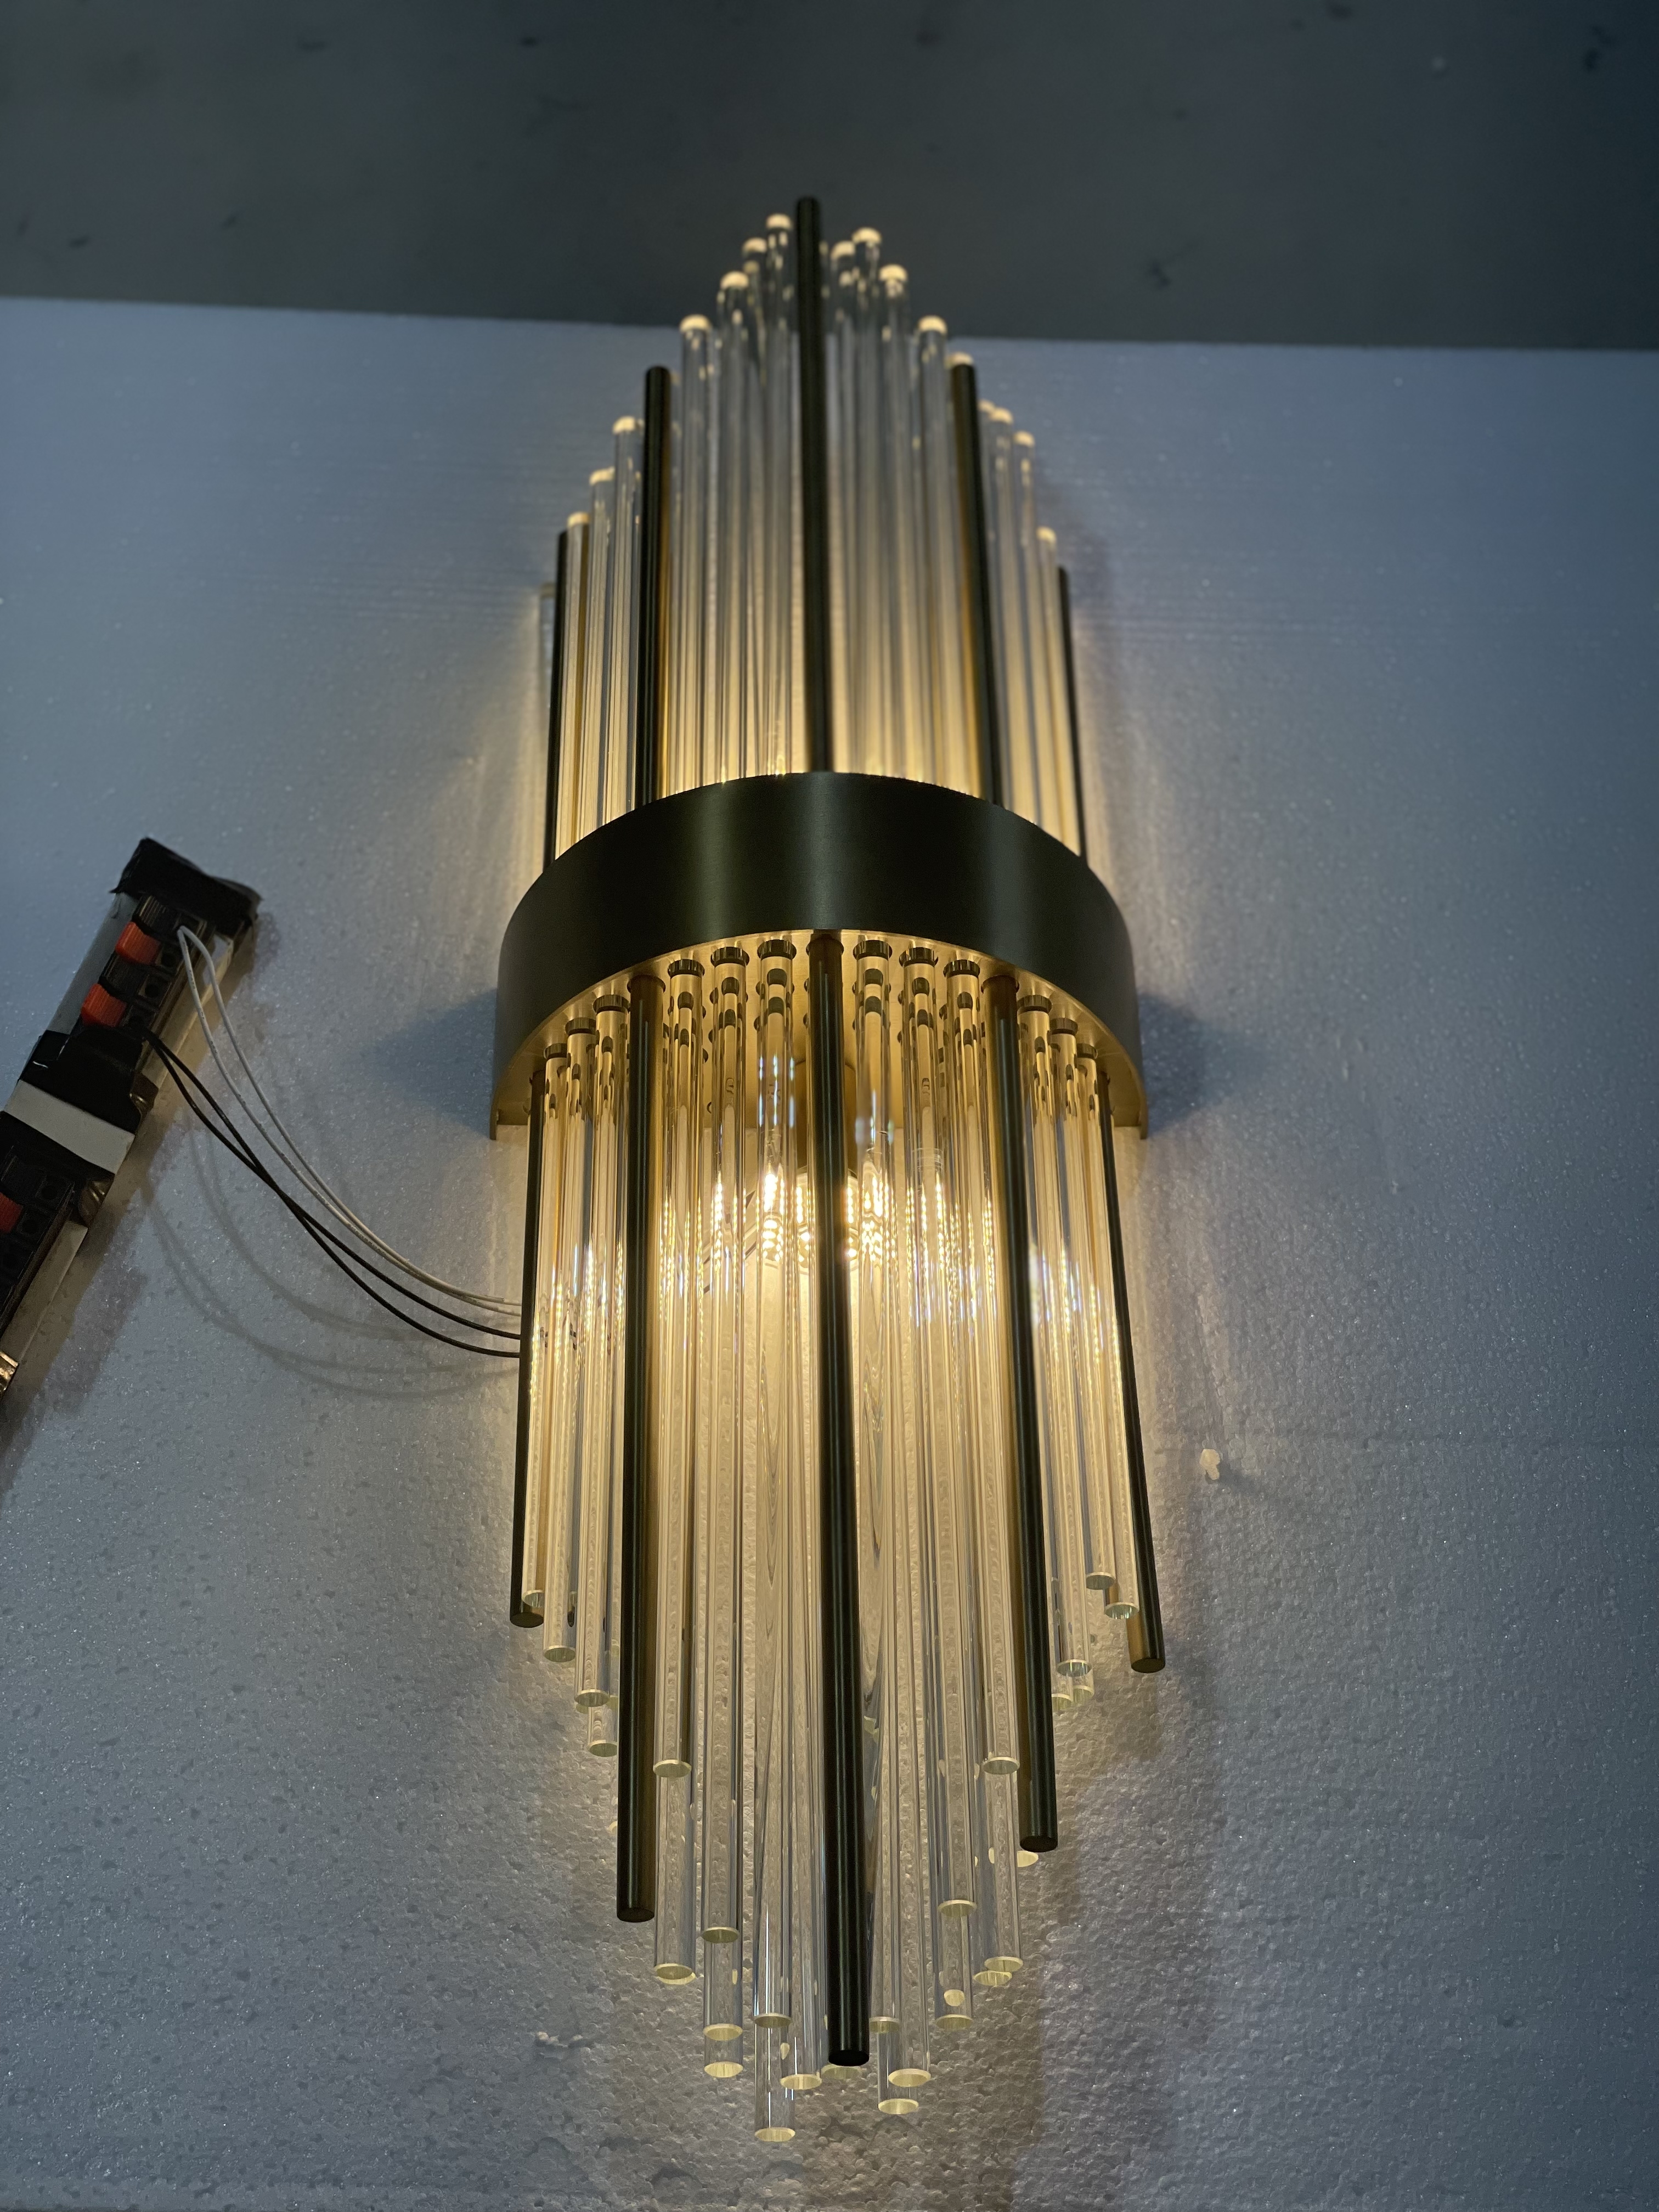 Classical Customize Crystal Glass Gold Metal Hallway Wall Light(KIZ-66W)